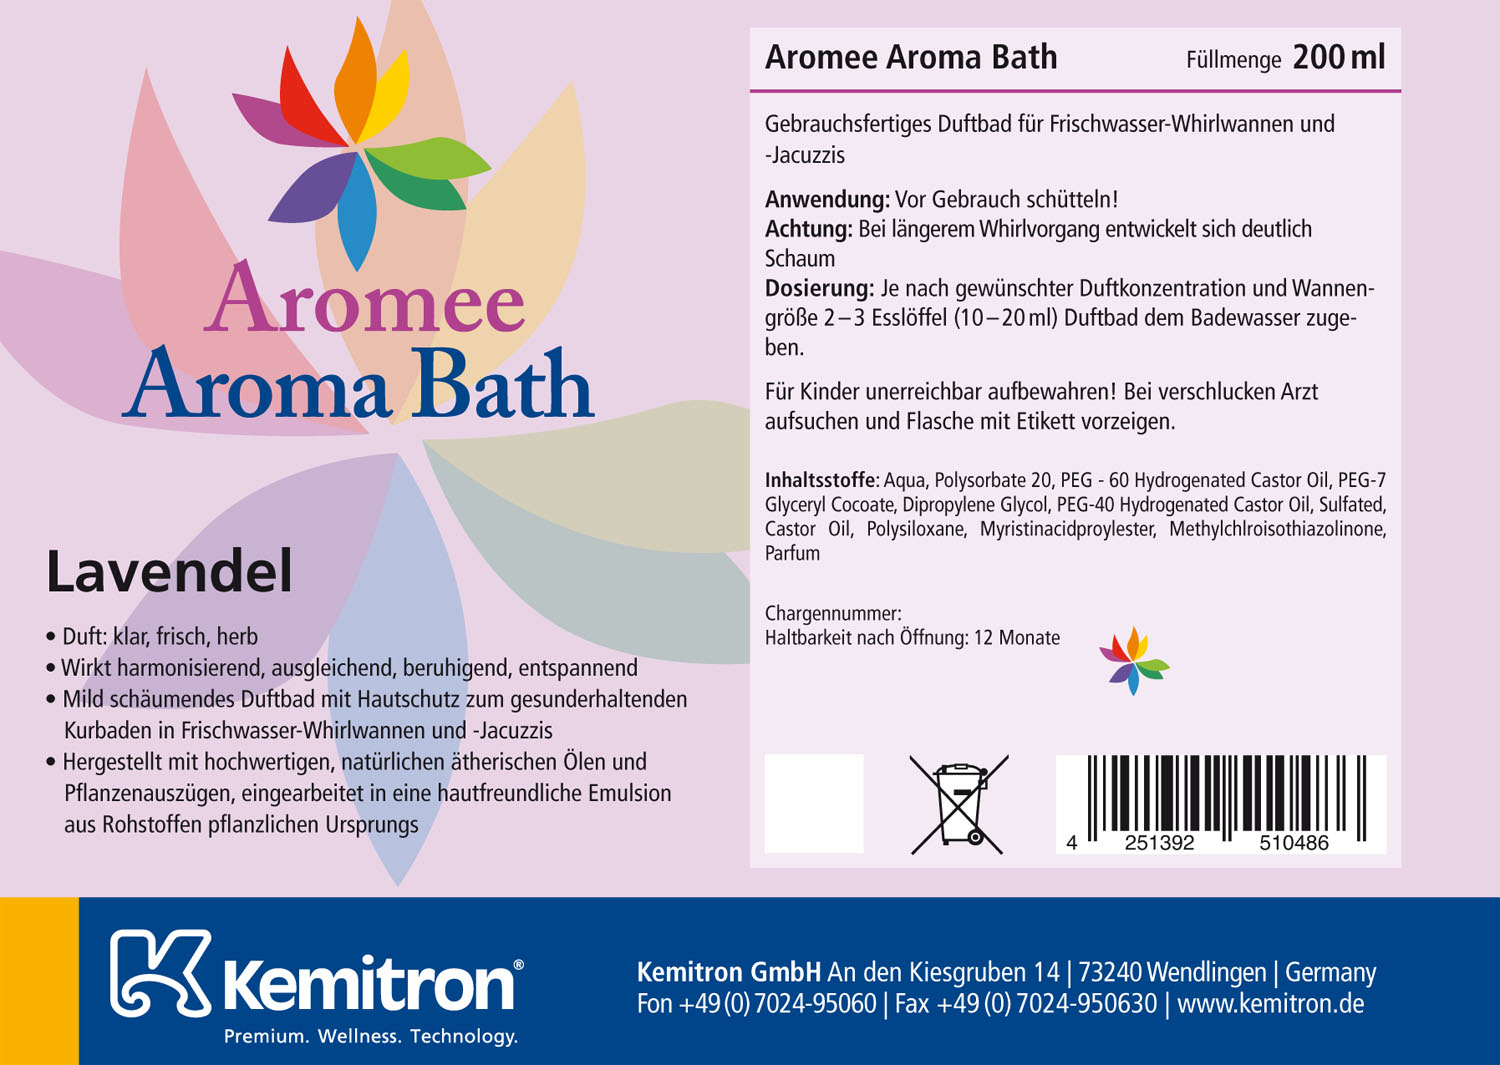 Aromee Aromabath "Lavendel"